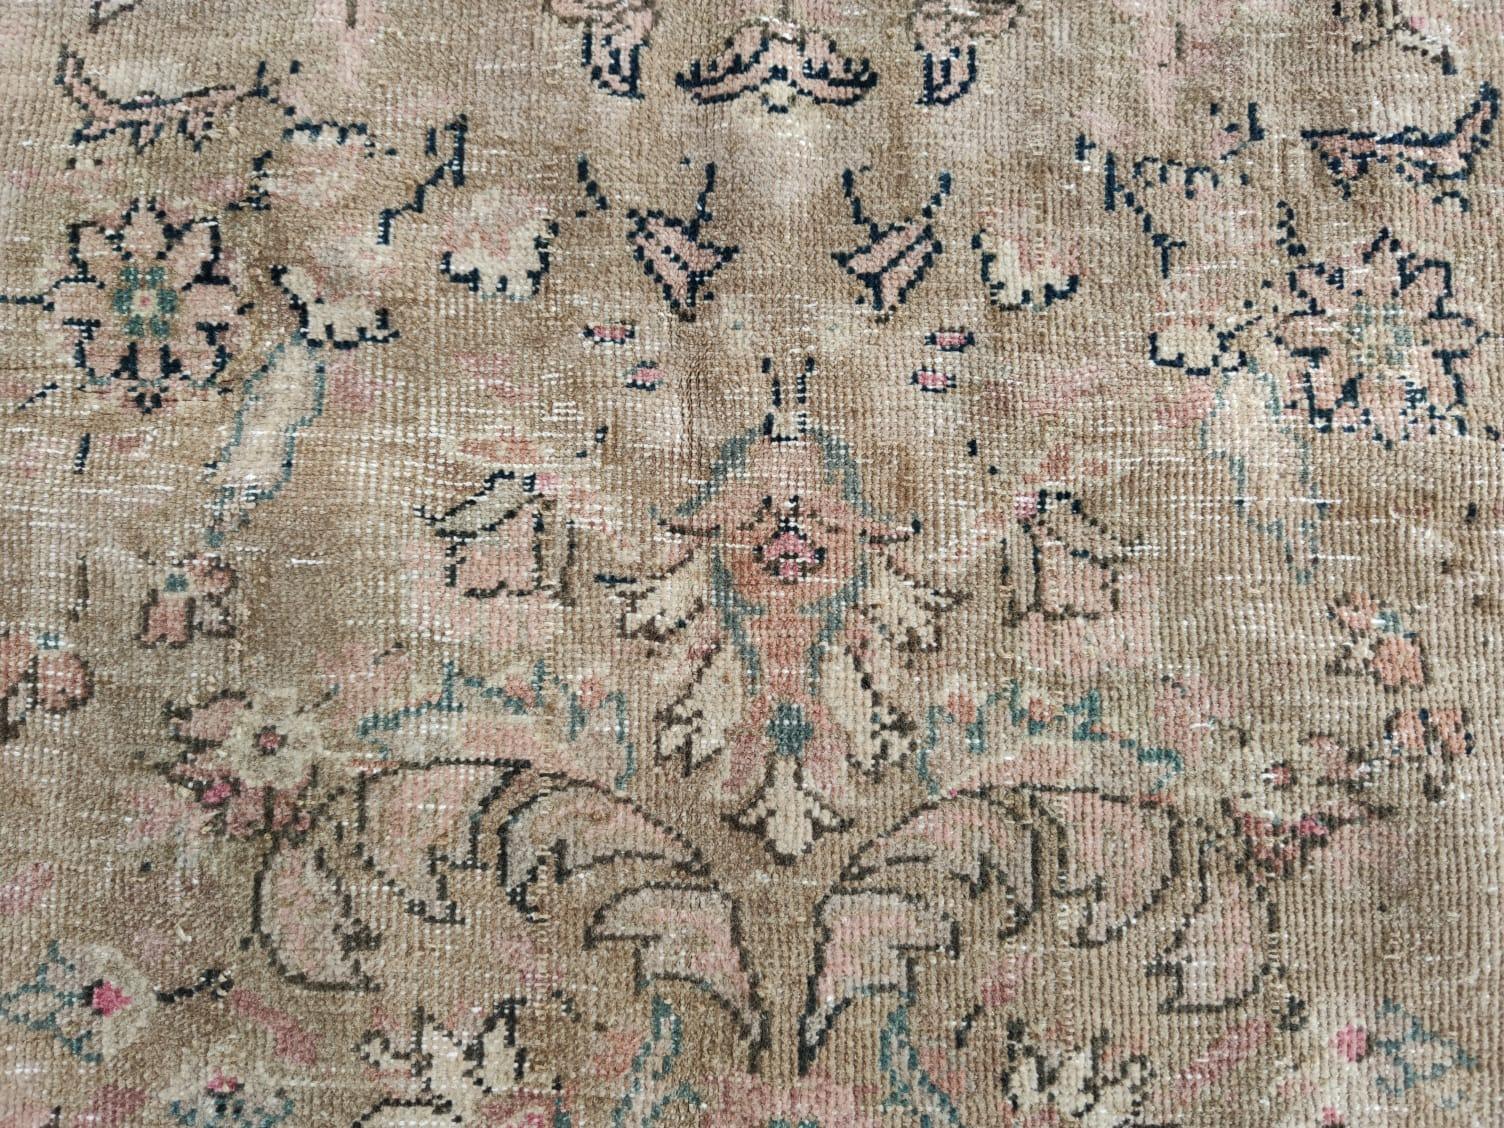 8.5x11 Ft Vintage Handmade Floral Pattern Turkish Wool Area Rug in Tawny Brown 3